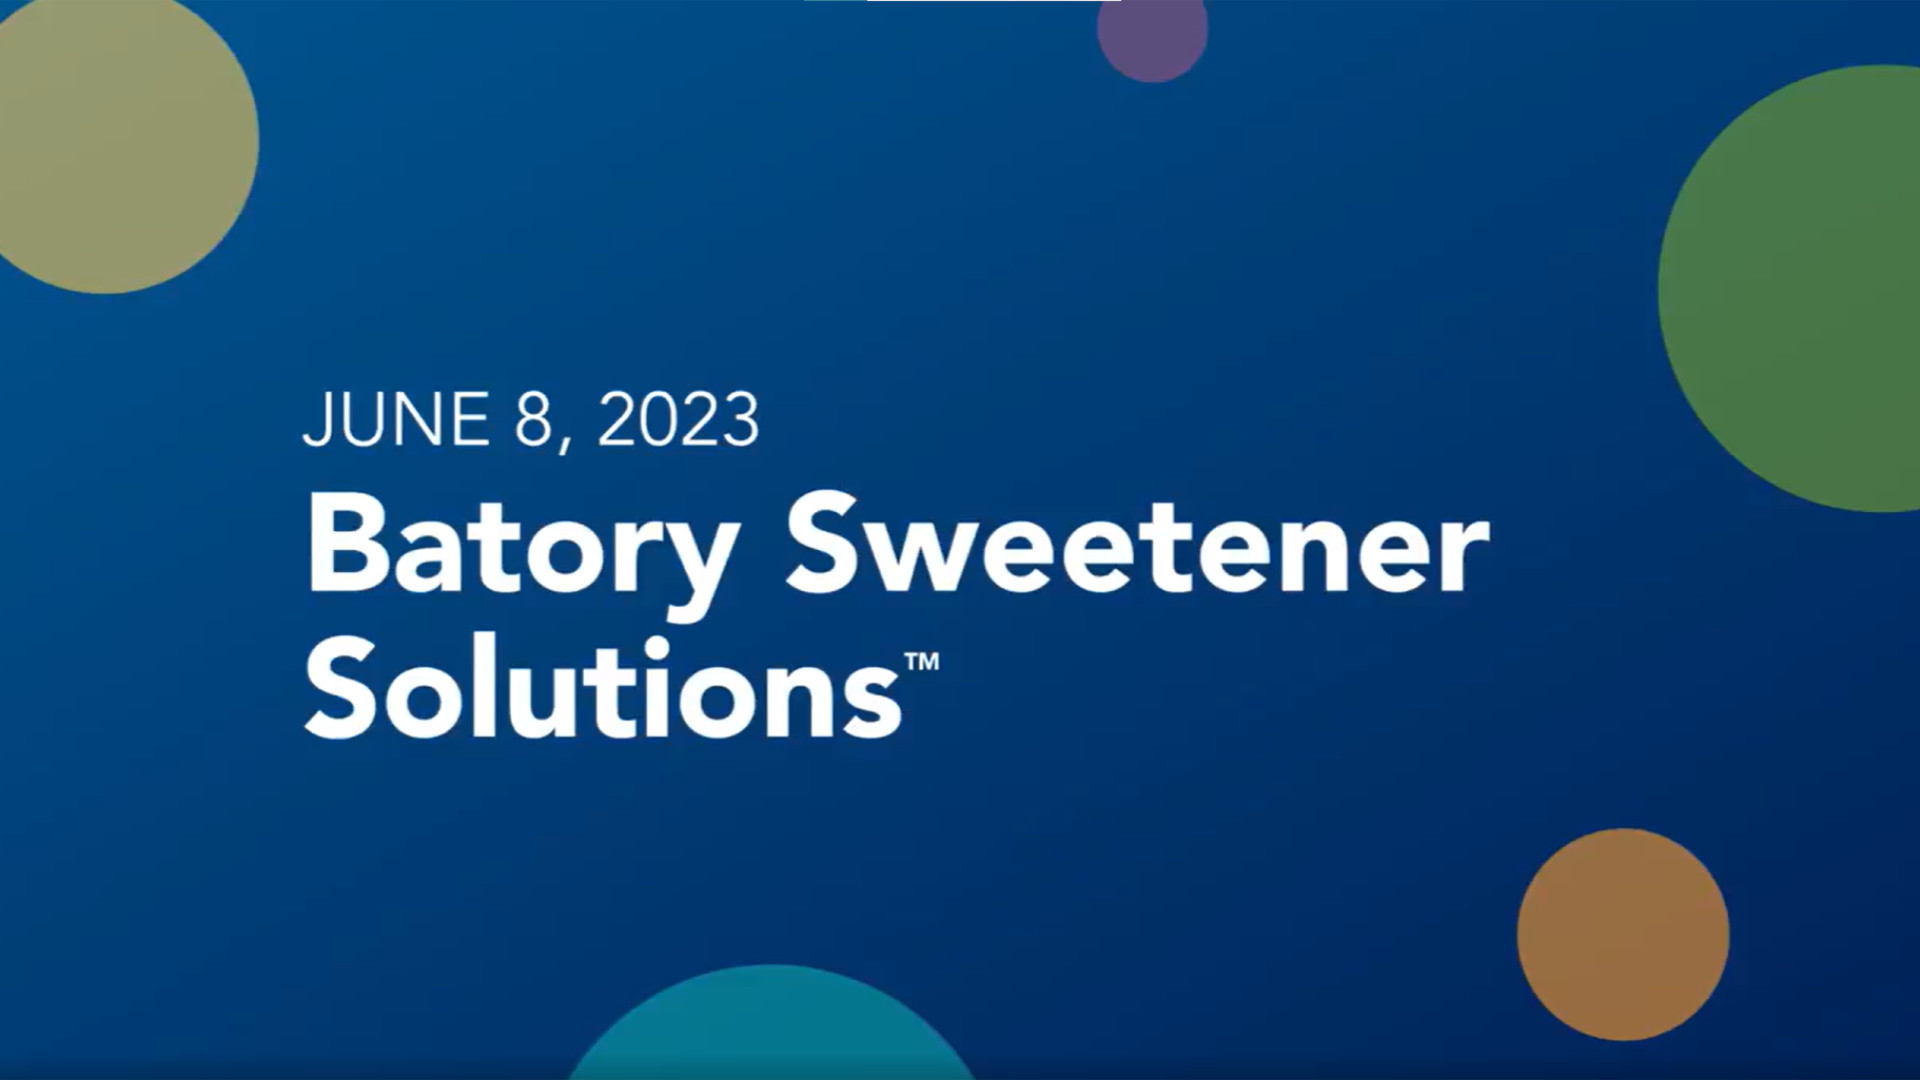 SMARTPOSIUM Episode 2 - Batory Sweetener Solutions